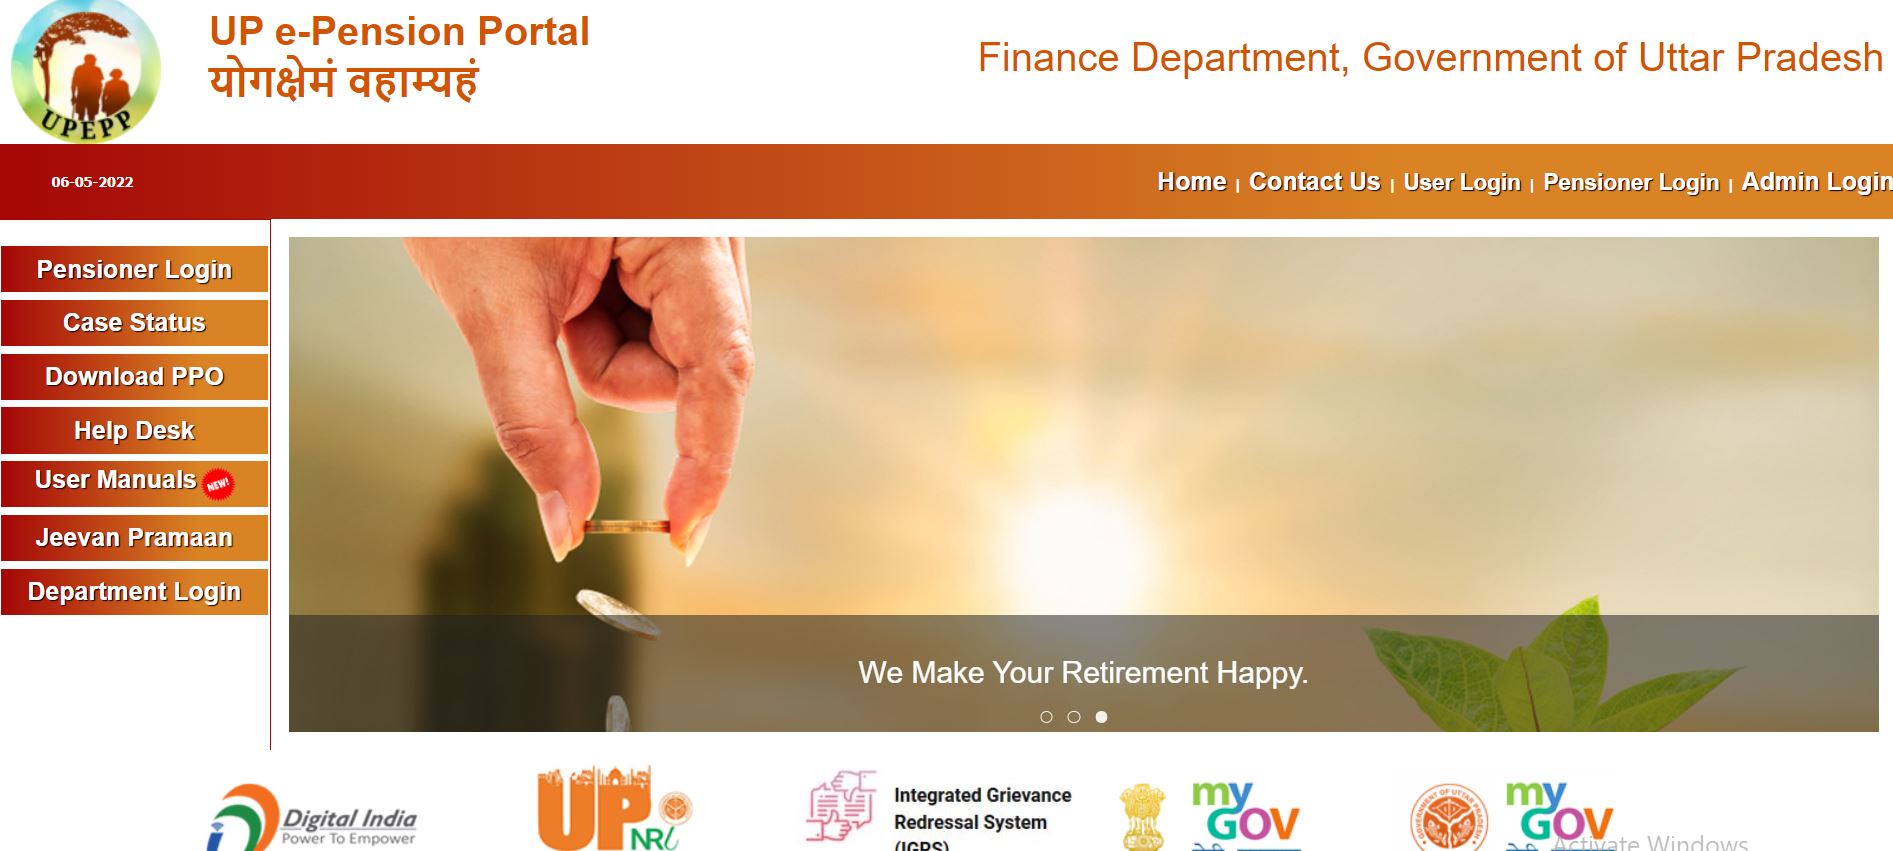 UP E-Pension Portal, यूपी ई पेंशन पोर्टल